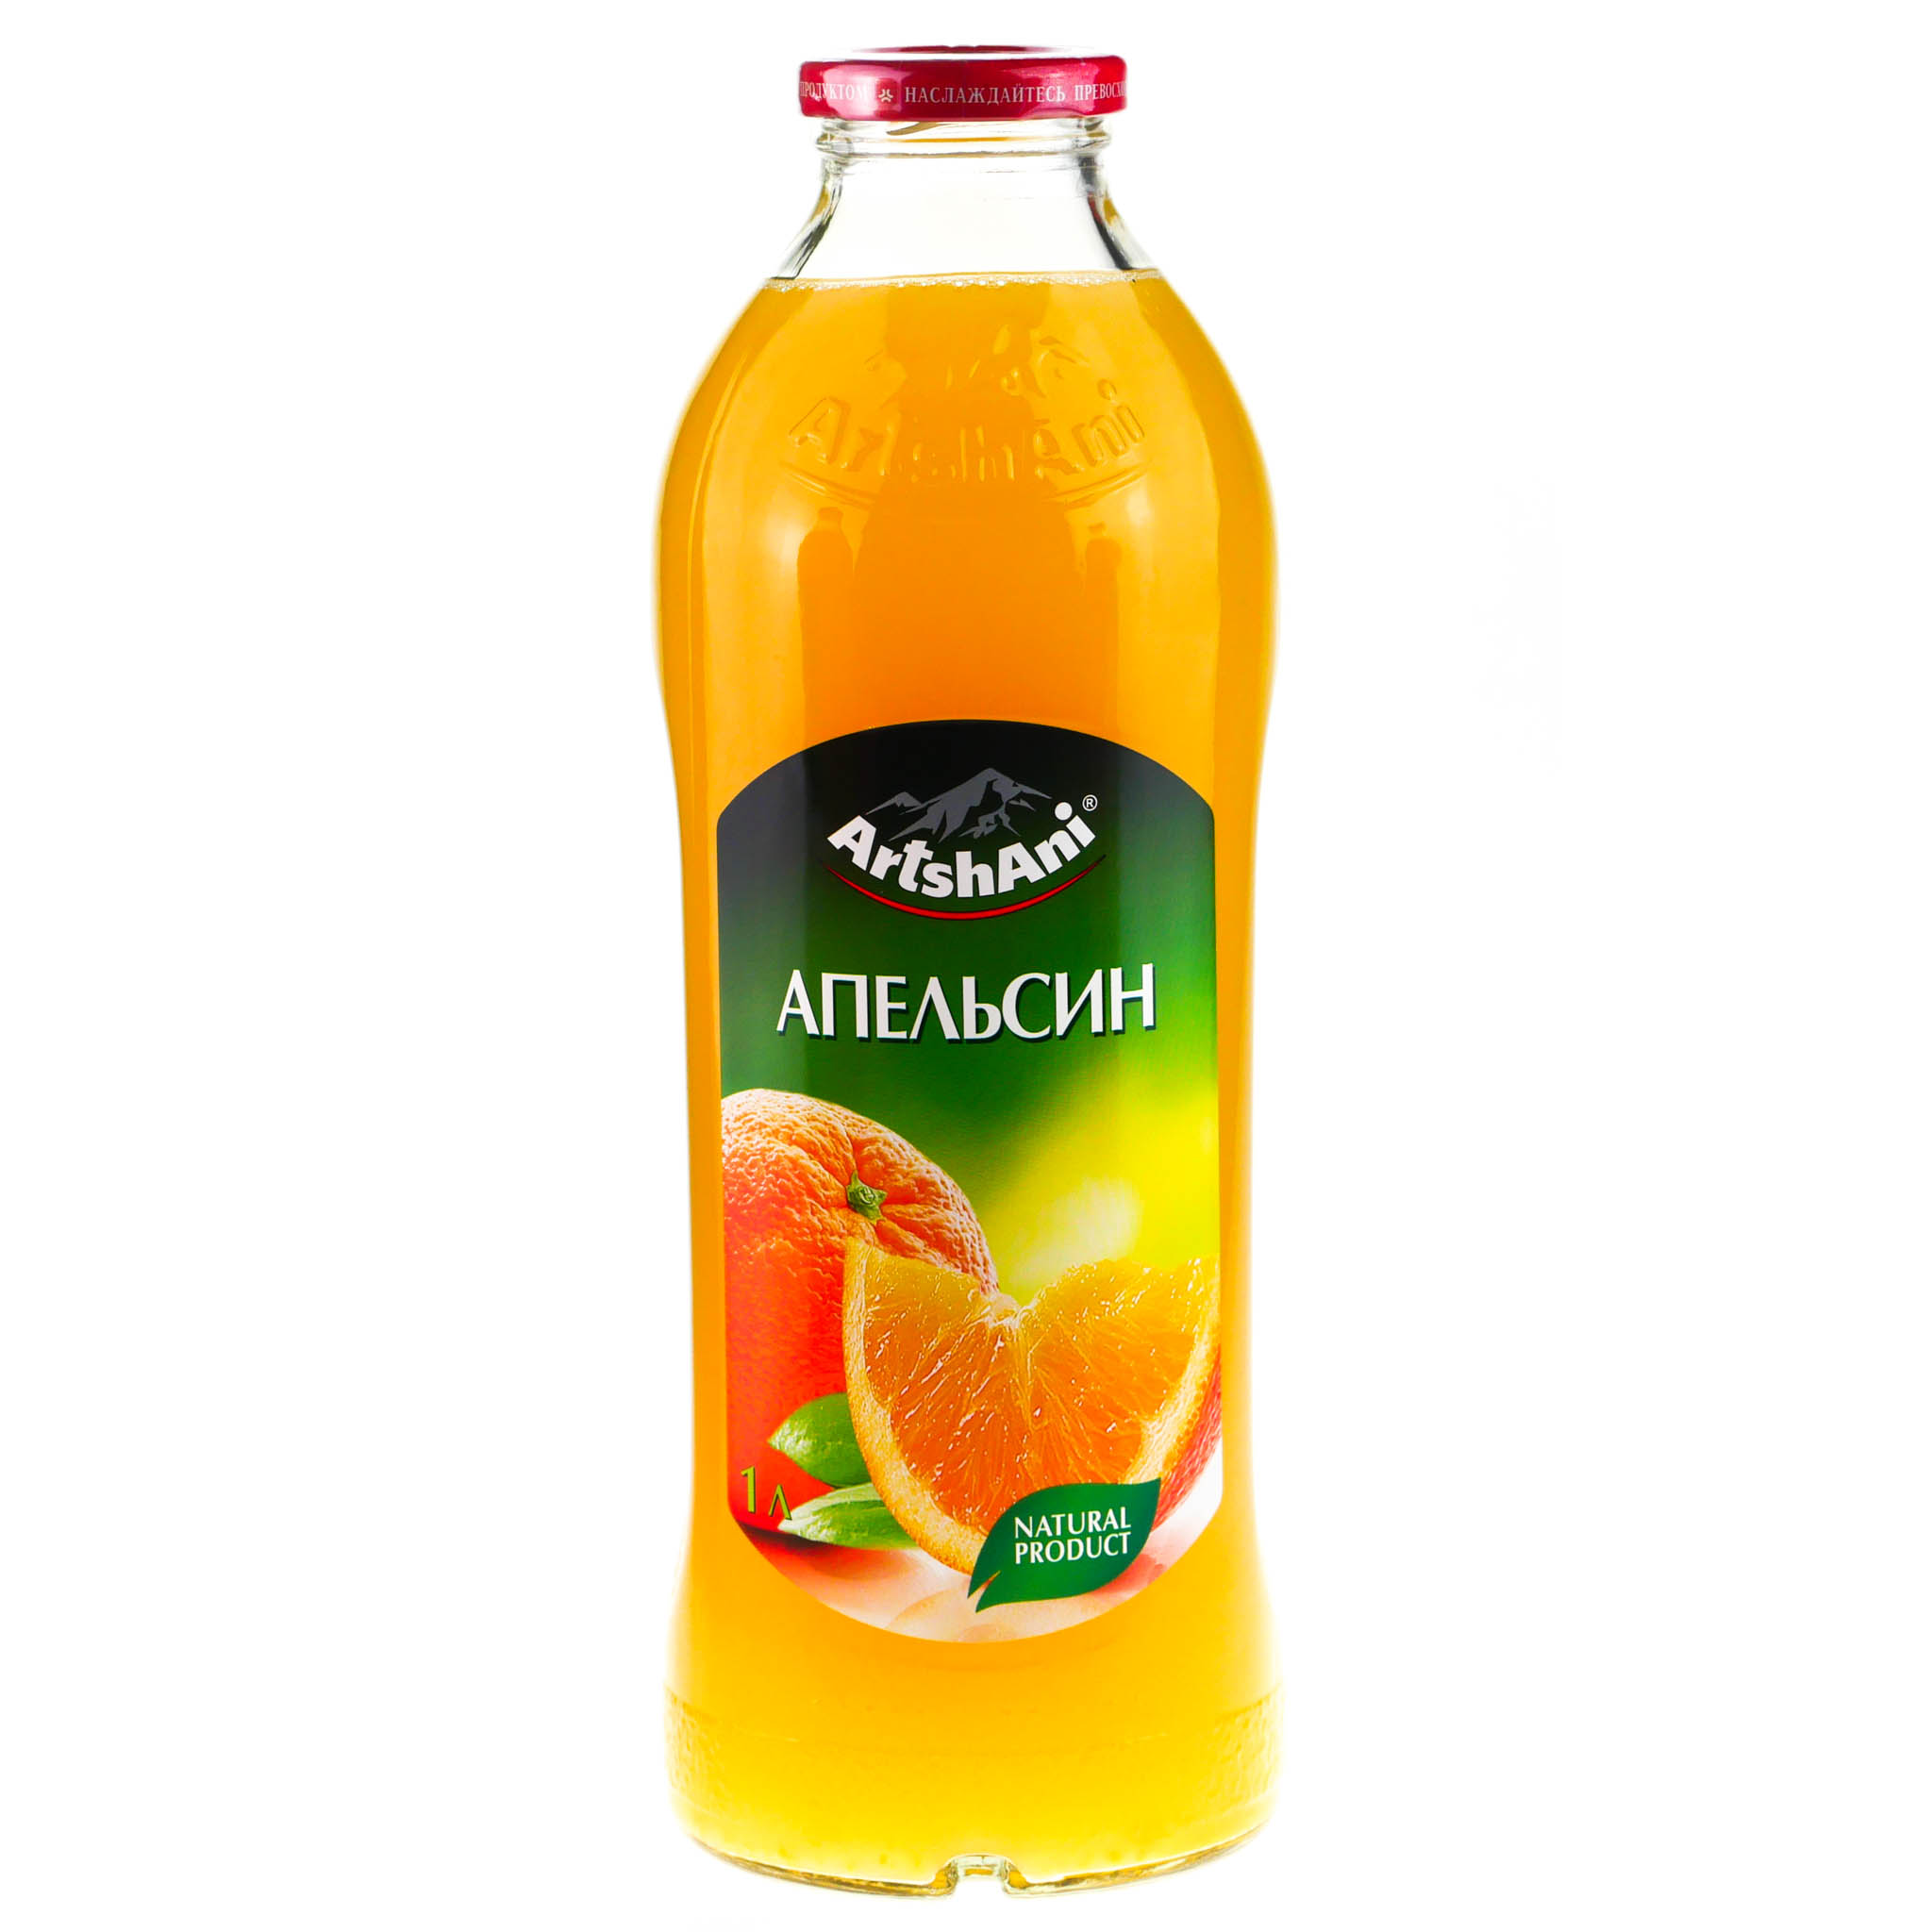 Со нектар. Нектар манго ARTSHANI 1л.. ARTSHANI апельсин сок. Нектар Аршани 1,0л манго/апельсин. Сок ARSHANI Premium яблочный с/б 1л.